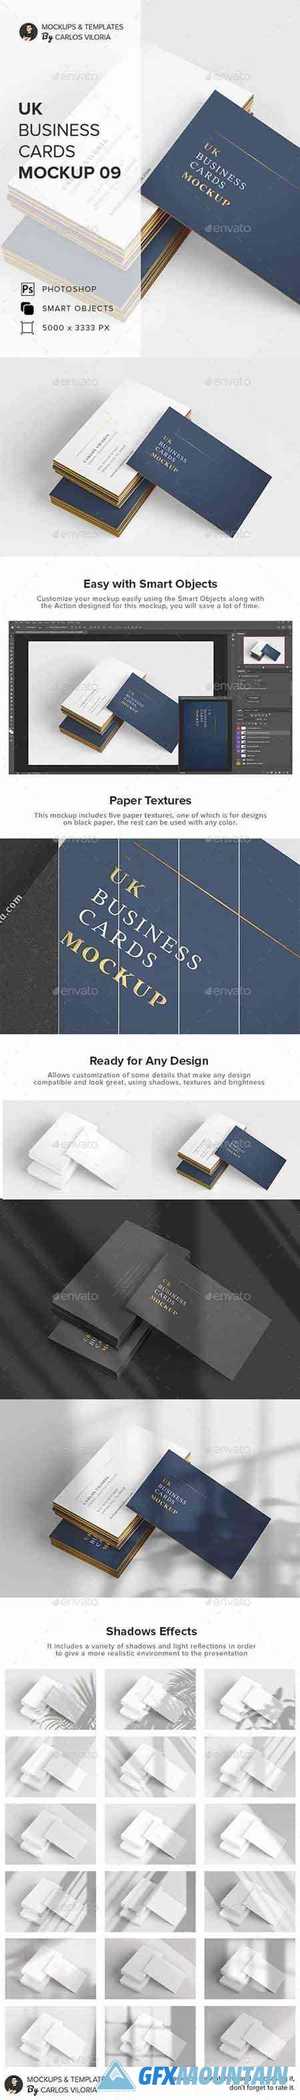 UK Business Cards Mockup 09 27826545